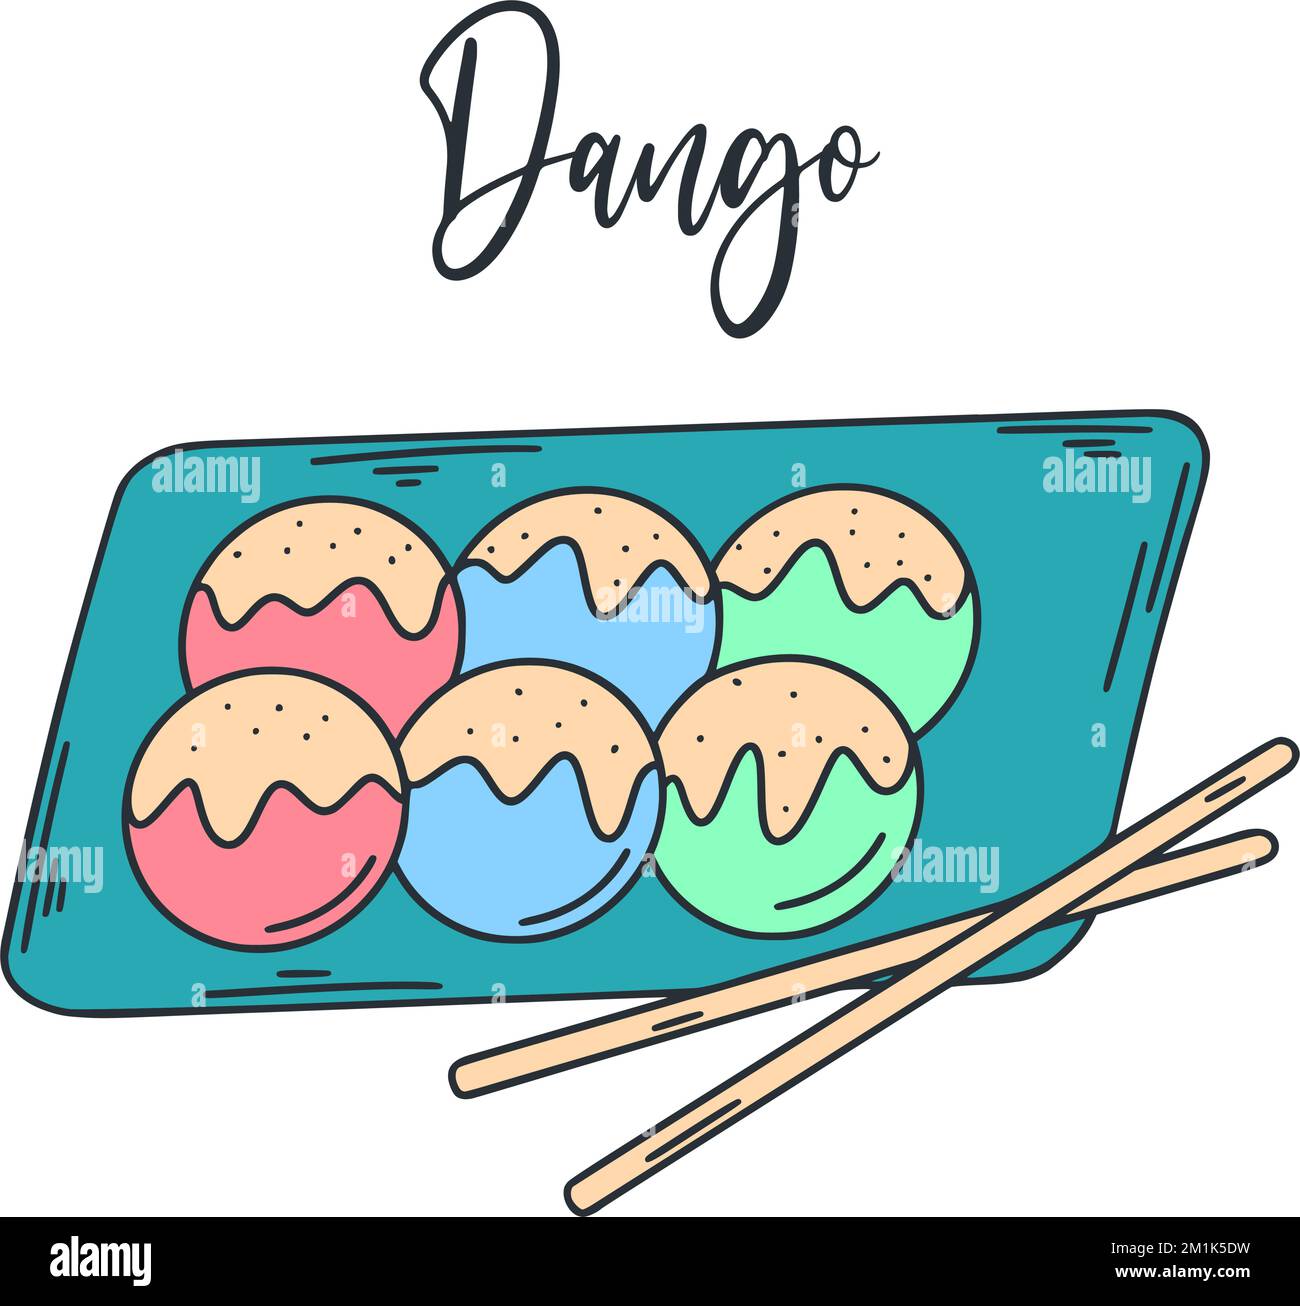 Dish of Japanese cuisine dango clip art. Asian food vector illustration. Dessert sweet dumplings with sauce Stock Vector